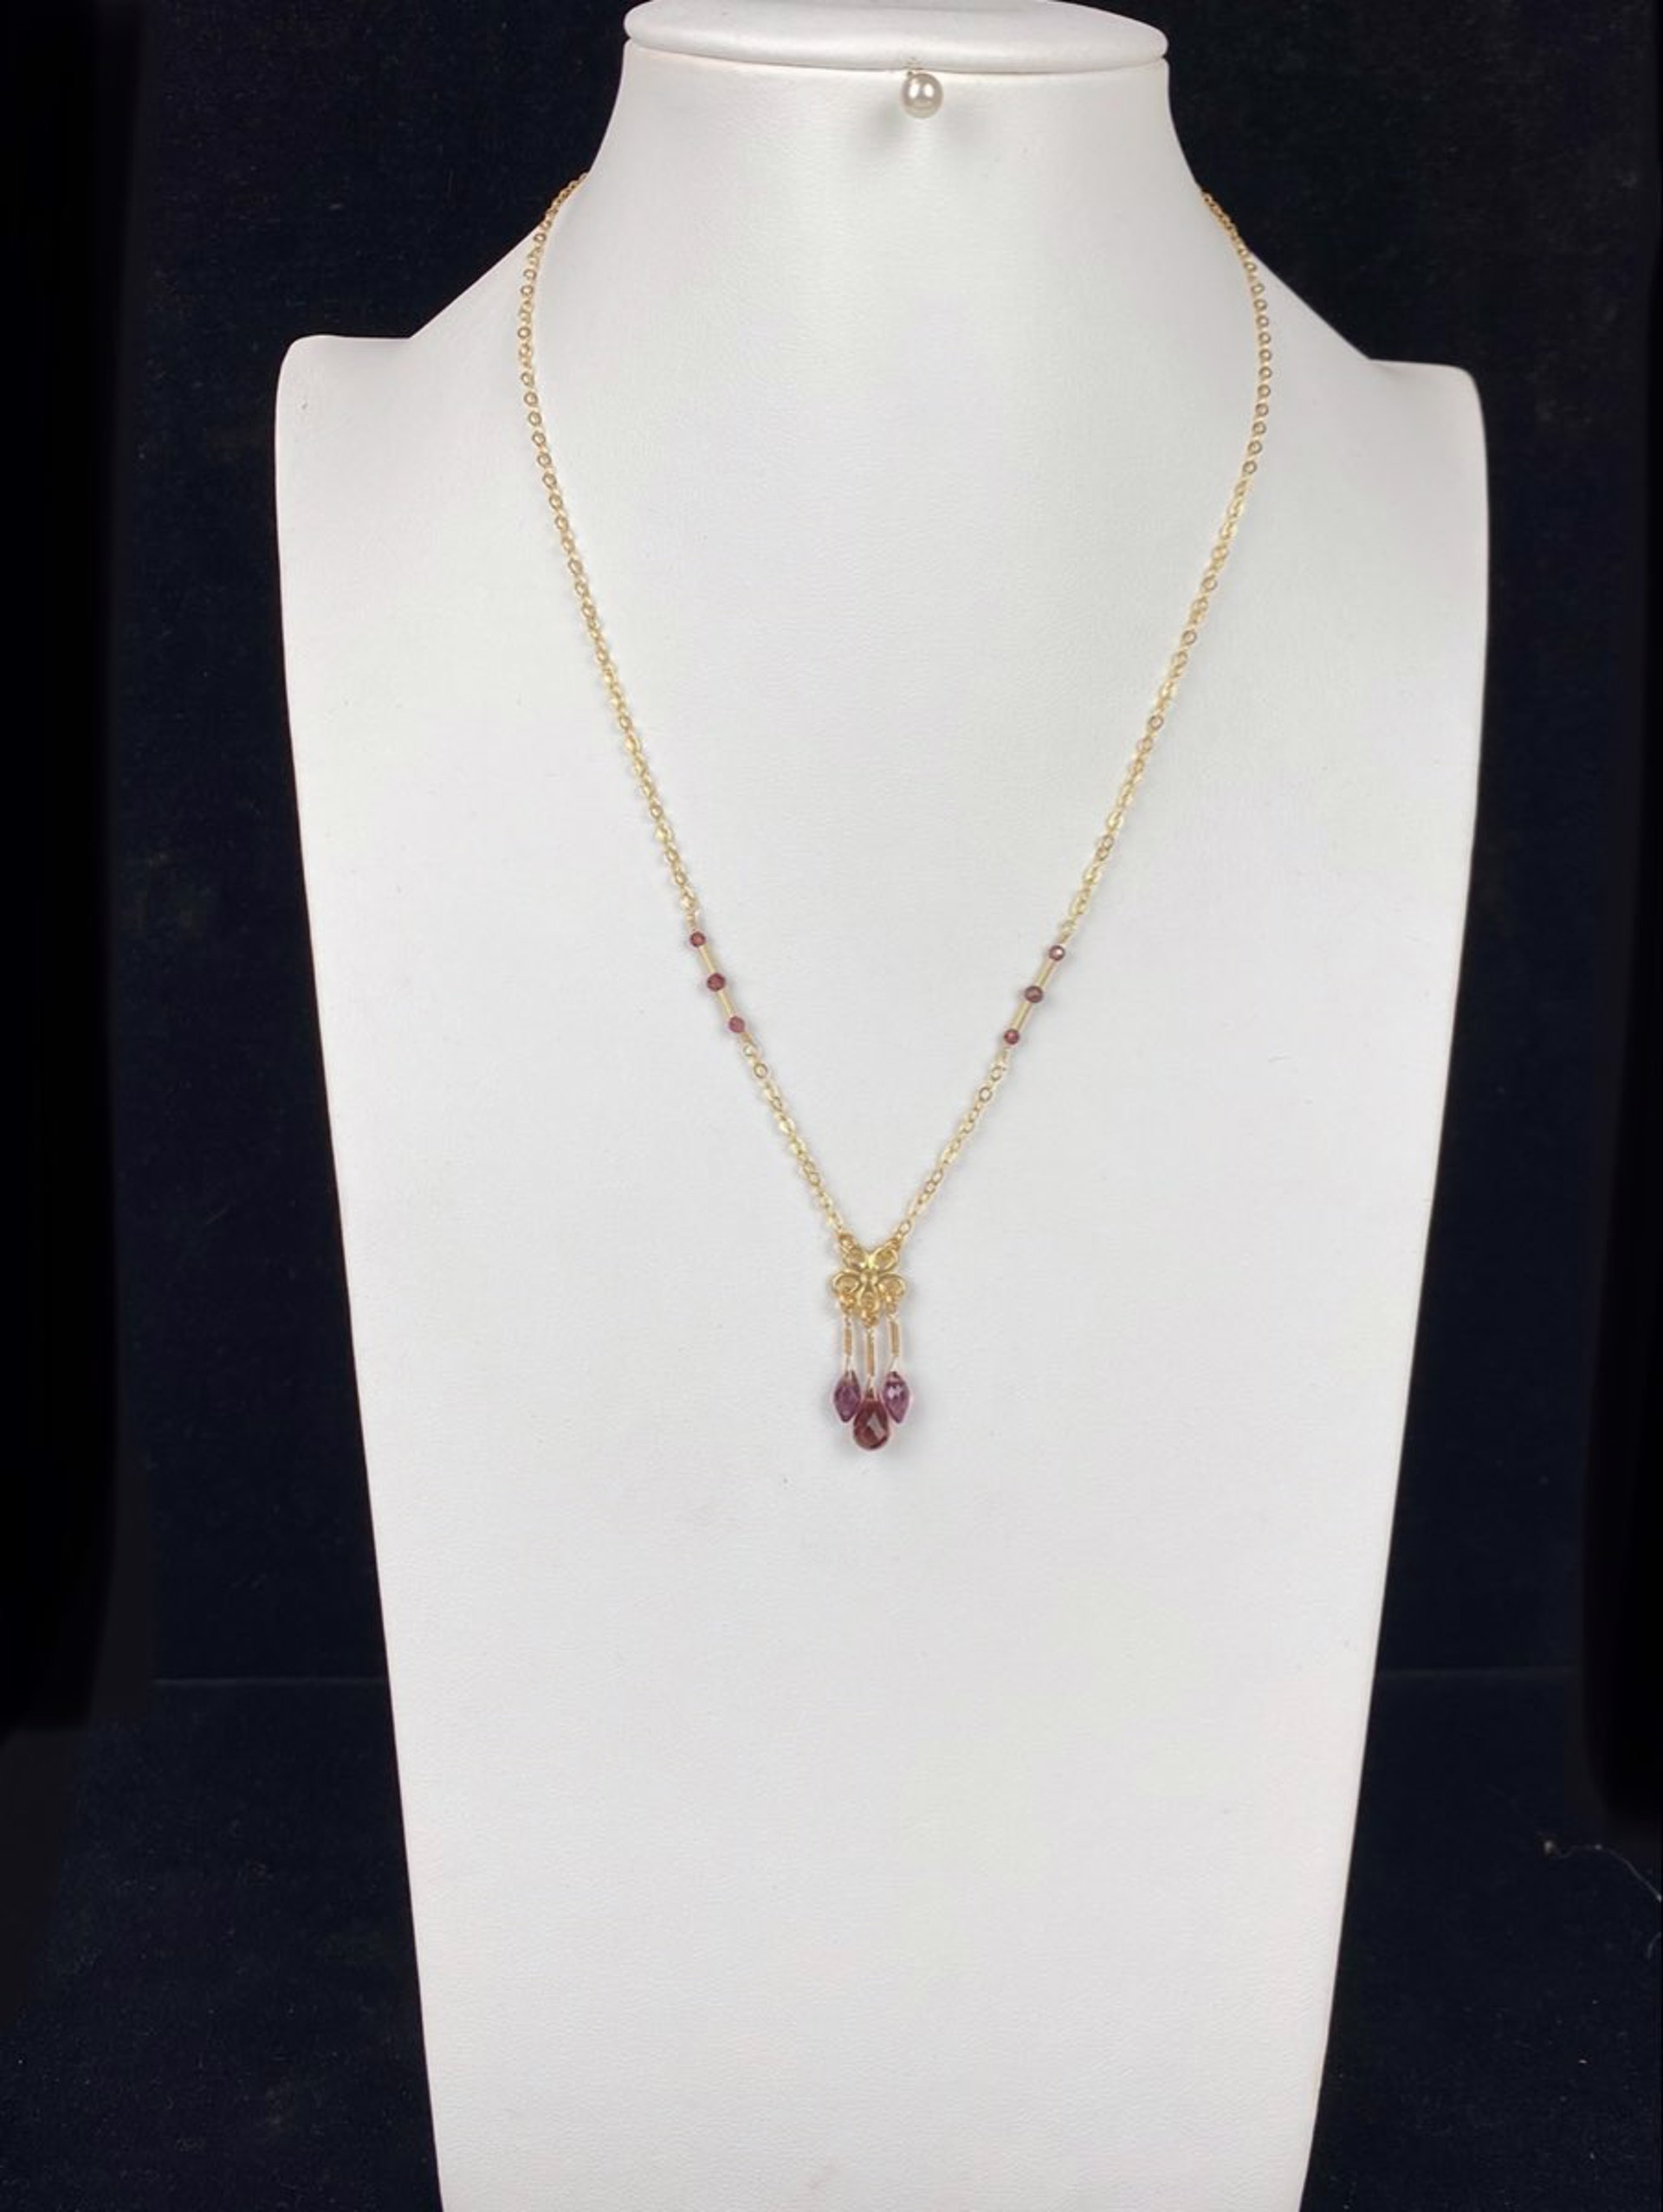 Rhodolite Garnet and 14K GF Flower Necklace by Lisa Kelley